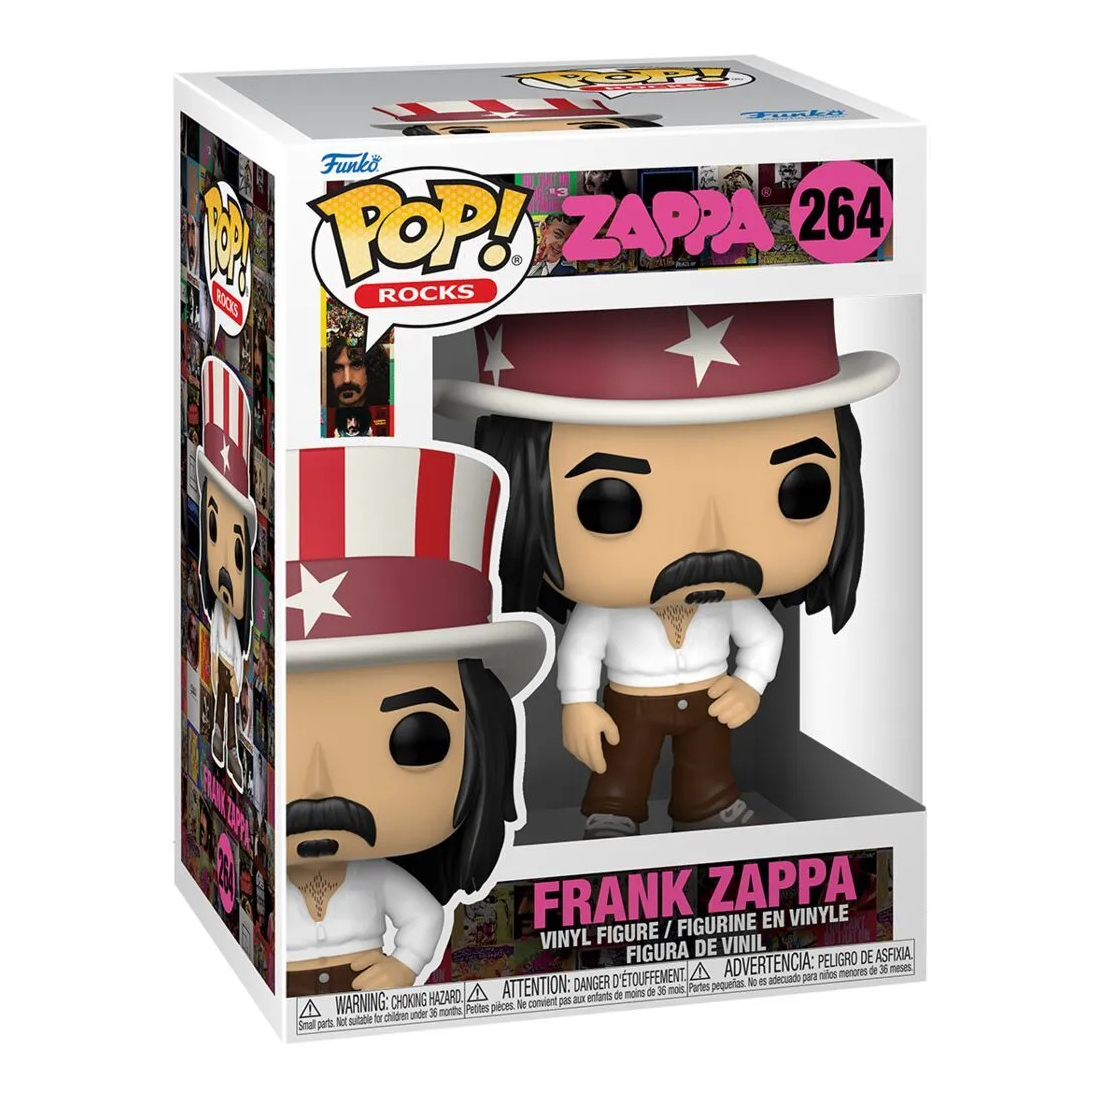 Фигурка Funko Pop! Rocks Frank Zappa фигурка funko pop rocks snoop dogg with fur coat